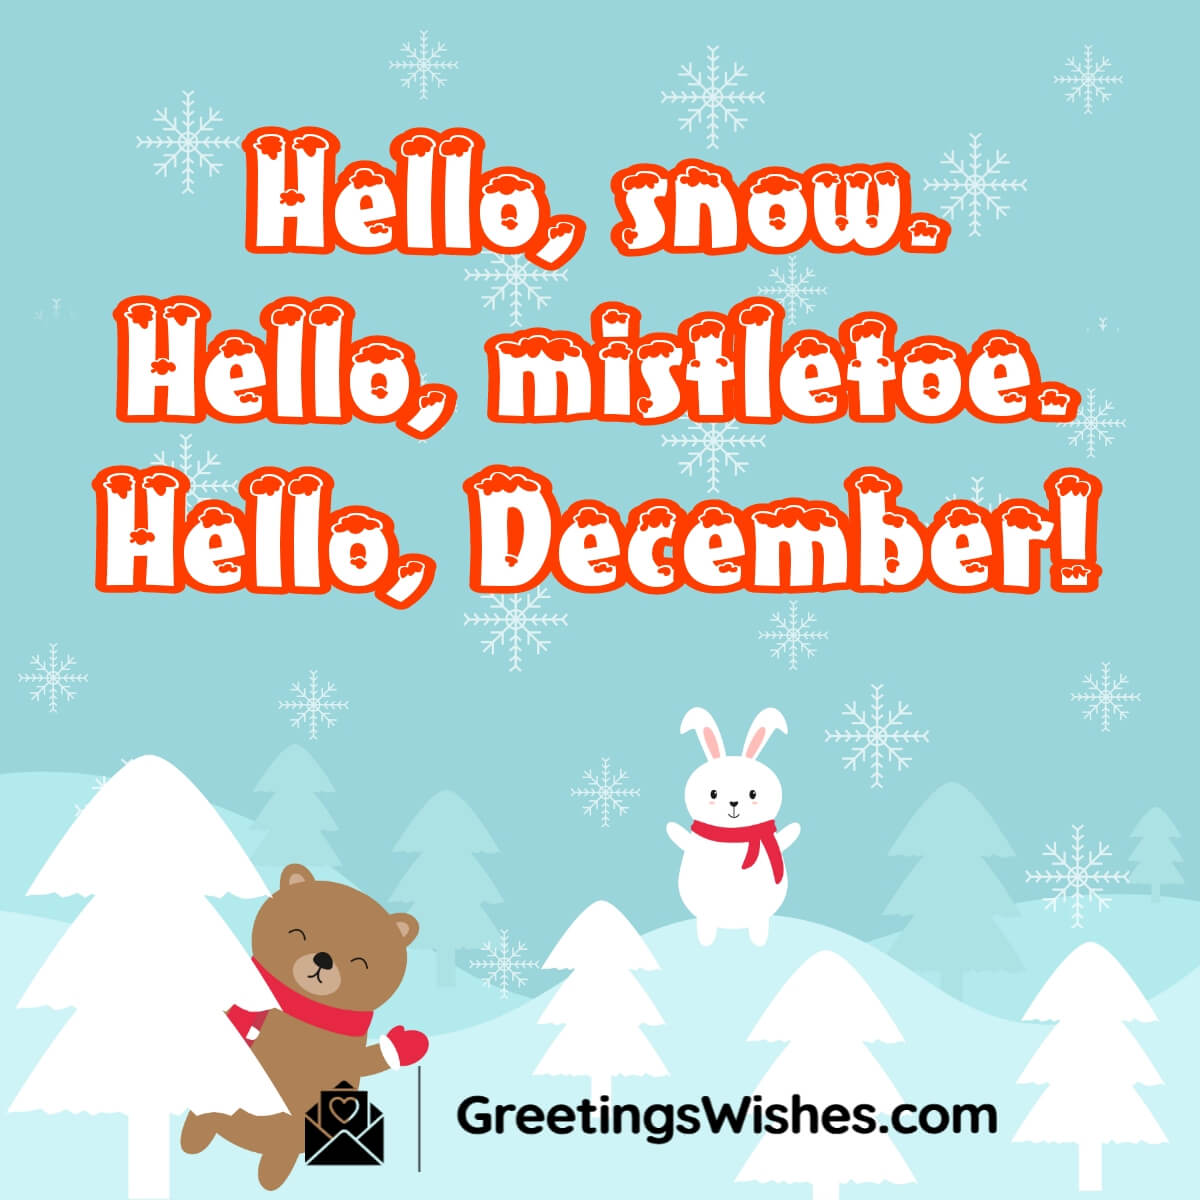 Hello, Snow. Hello, Mistletoe. Hello, December!